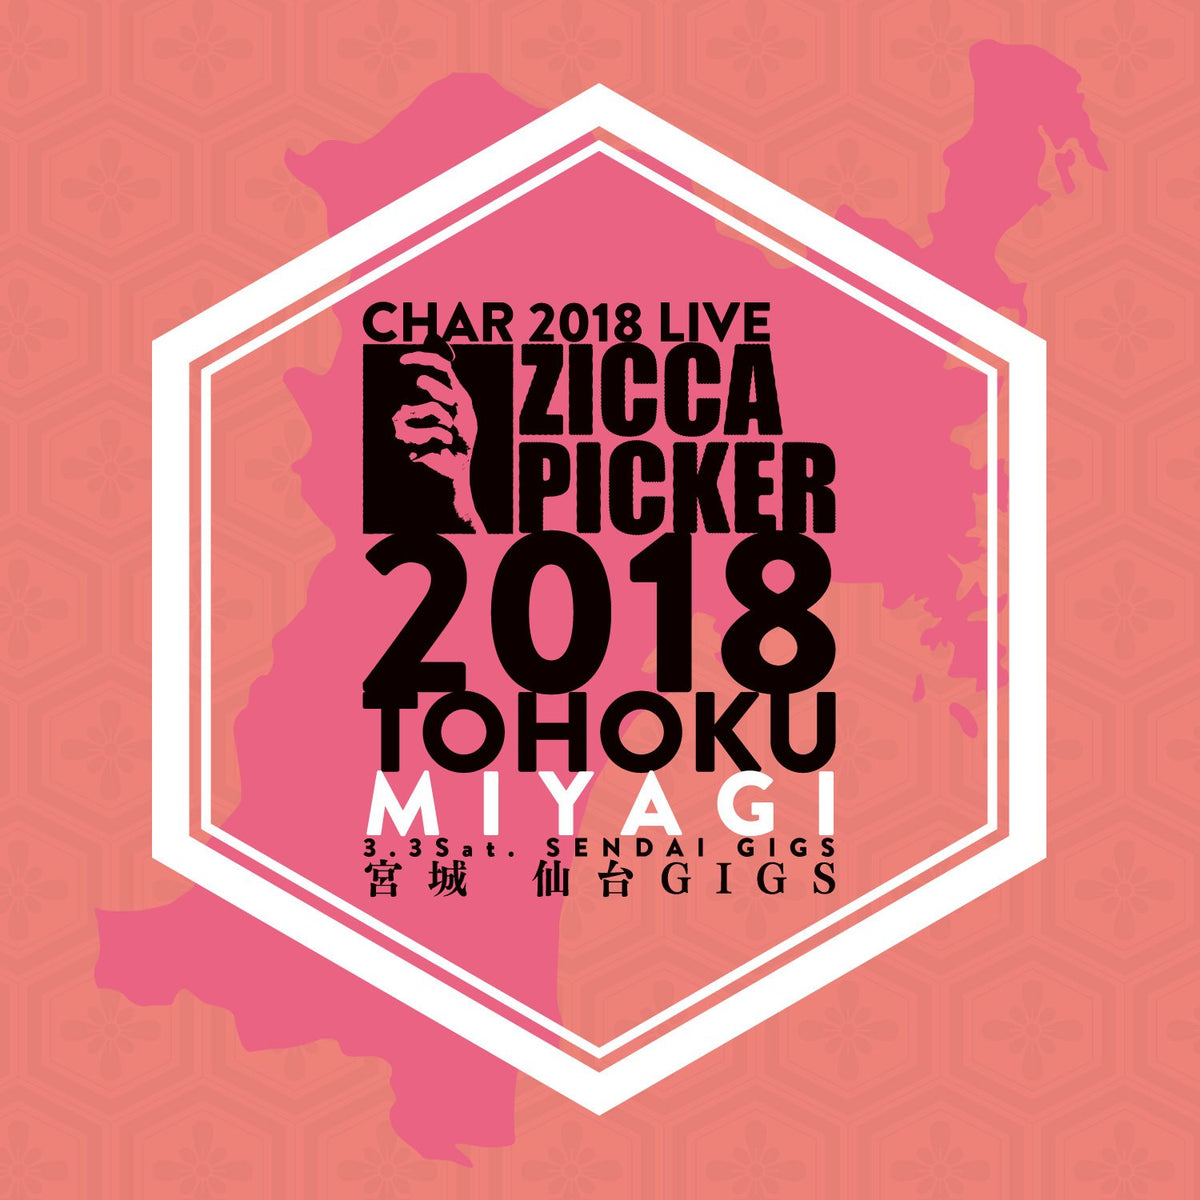 送料込 CHAR - ZICCA PICKER 2018 VOL.2 LIVE IN MIYAGI / 3.3 宮城 仙台GIGS公演